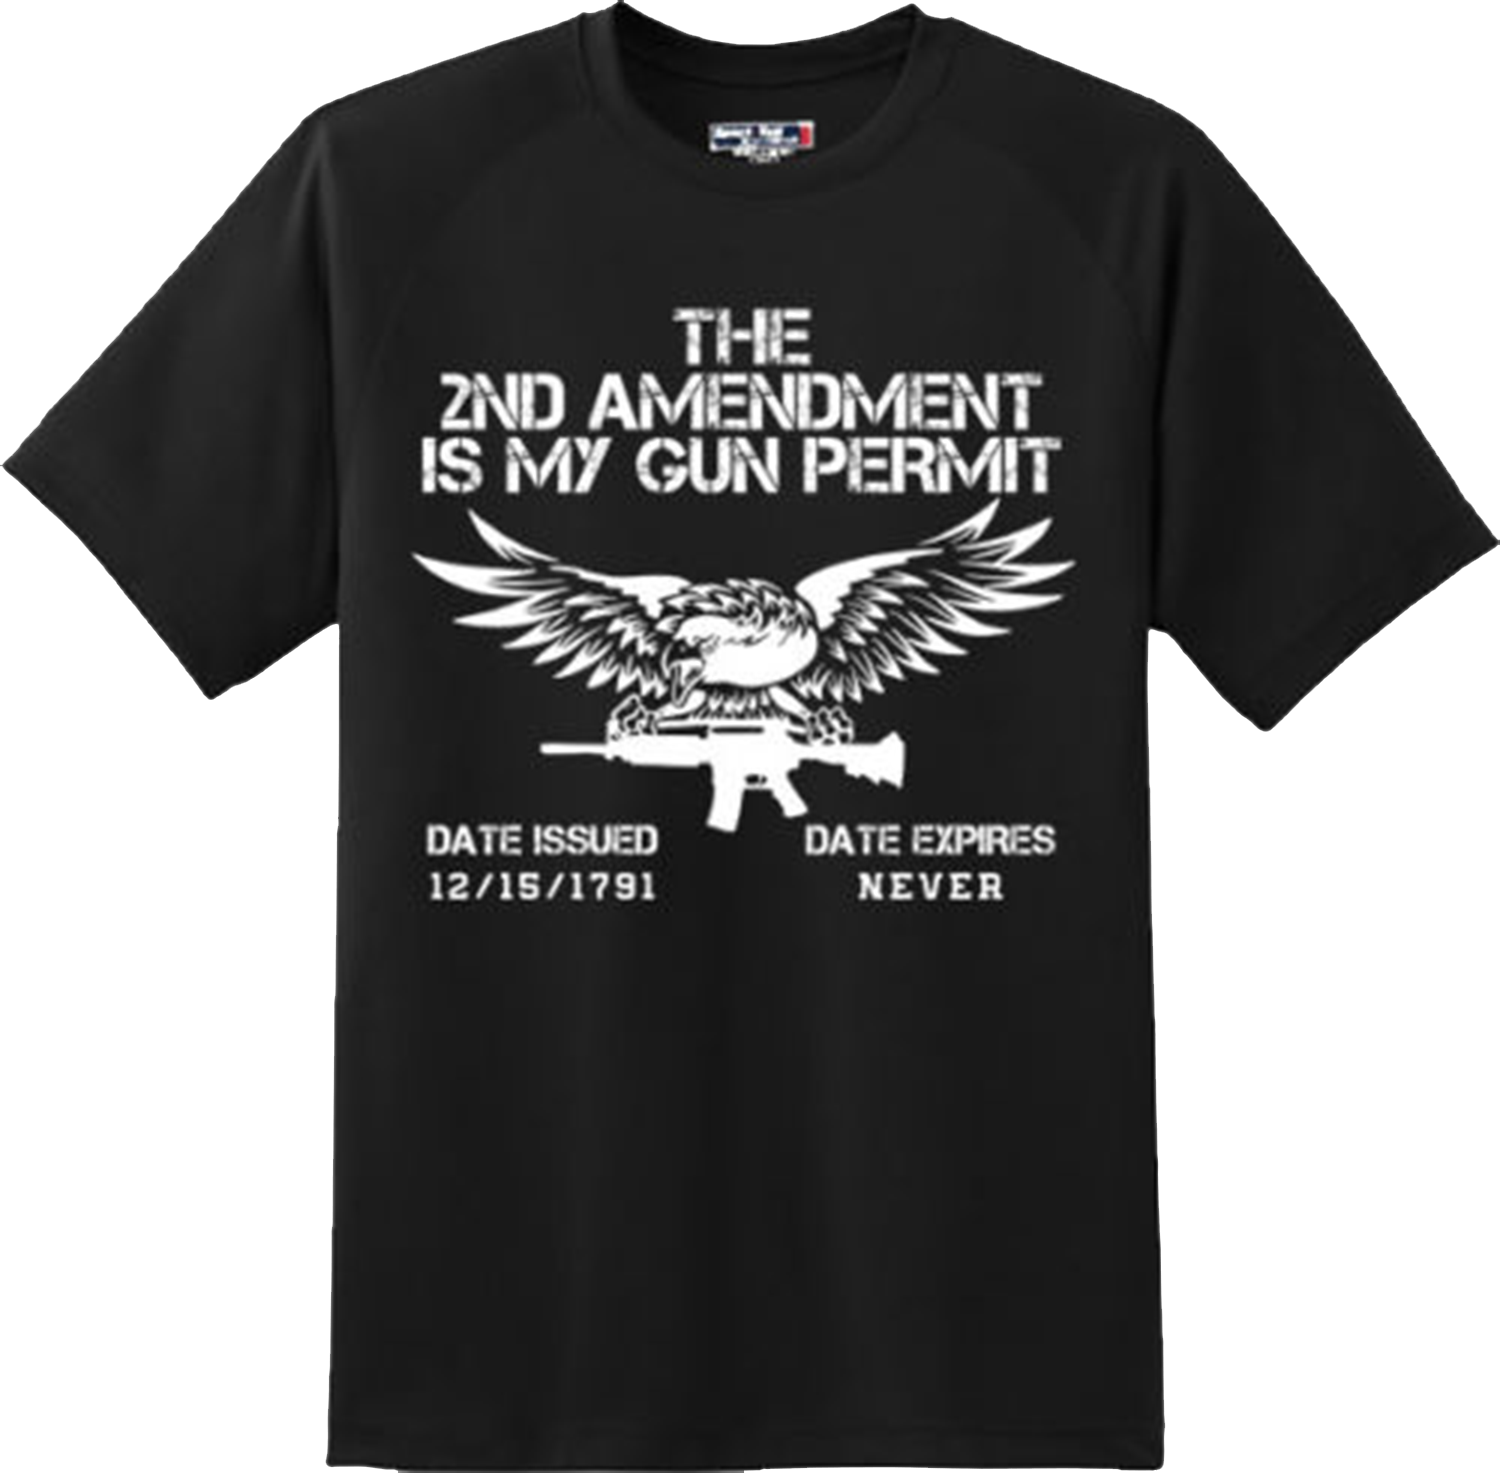 2nd Amendment My Gun Permit Patriotic American Freedom T Shirt New Graphic Tee